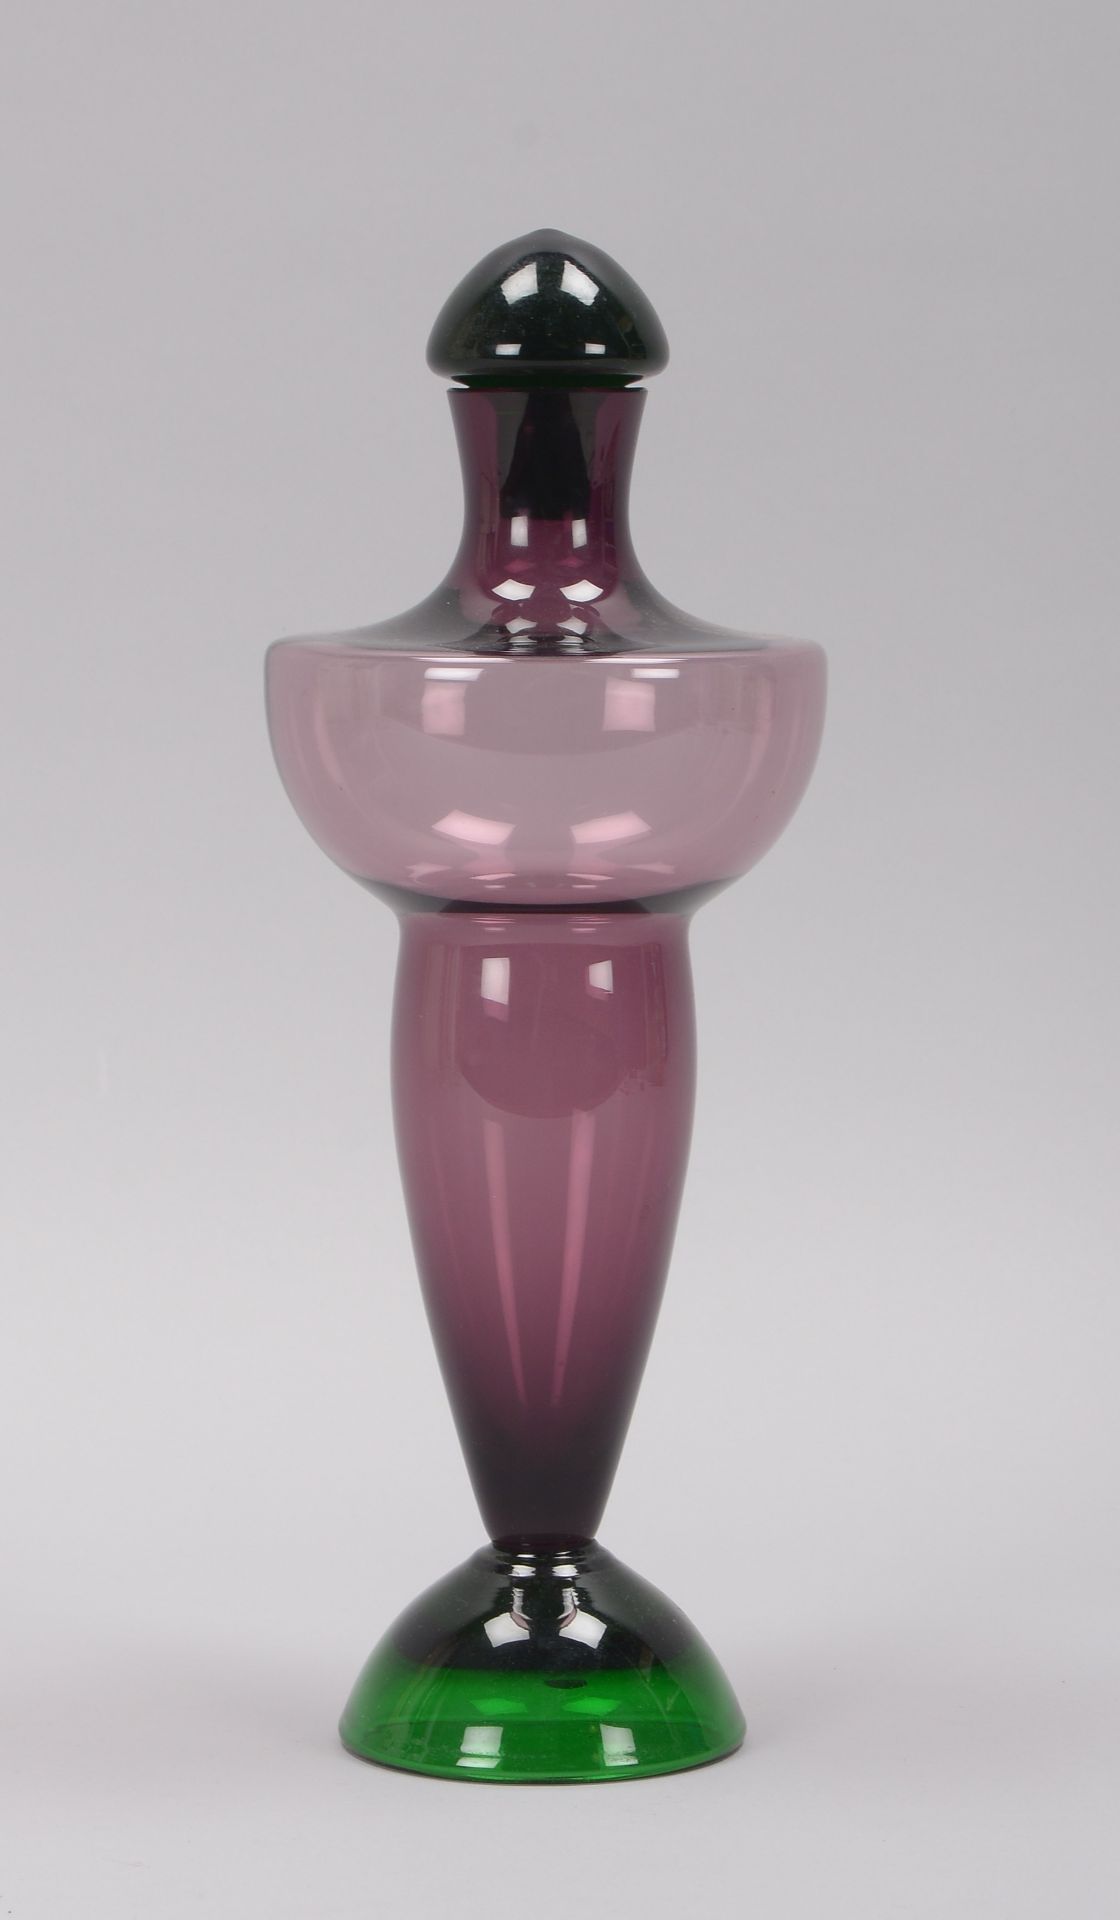 Karaffe, gr&uuml;n-violettes Glas, mit St&ouml;psel; H&ouml;he 35 cm